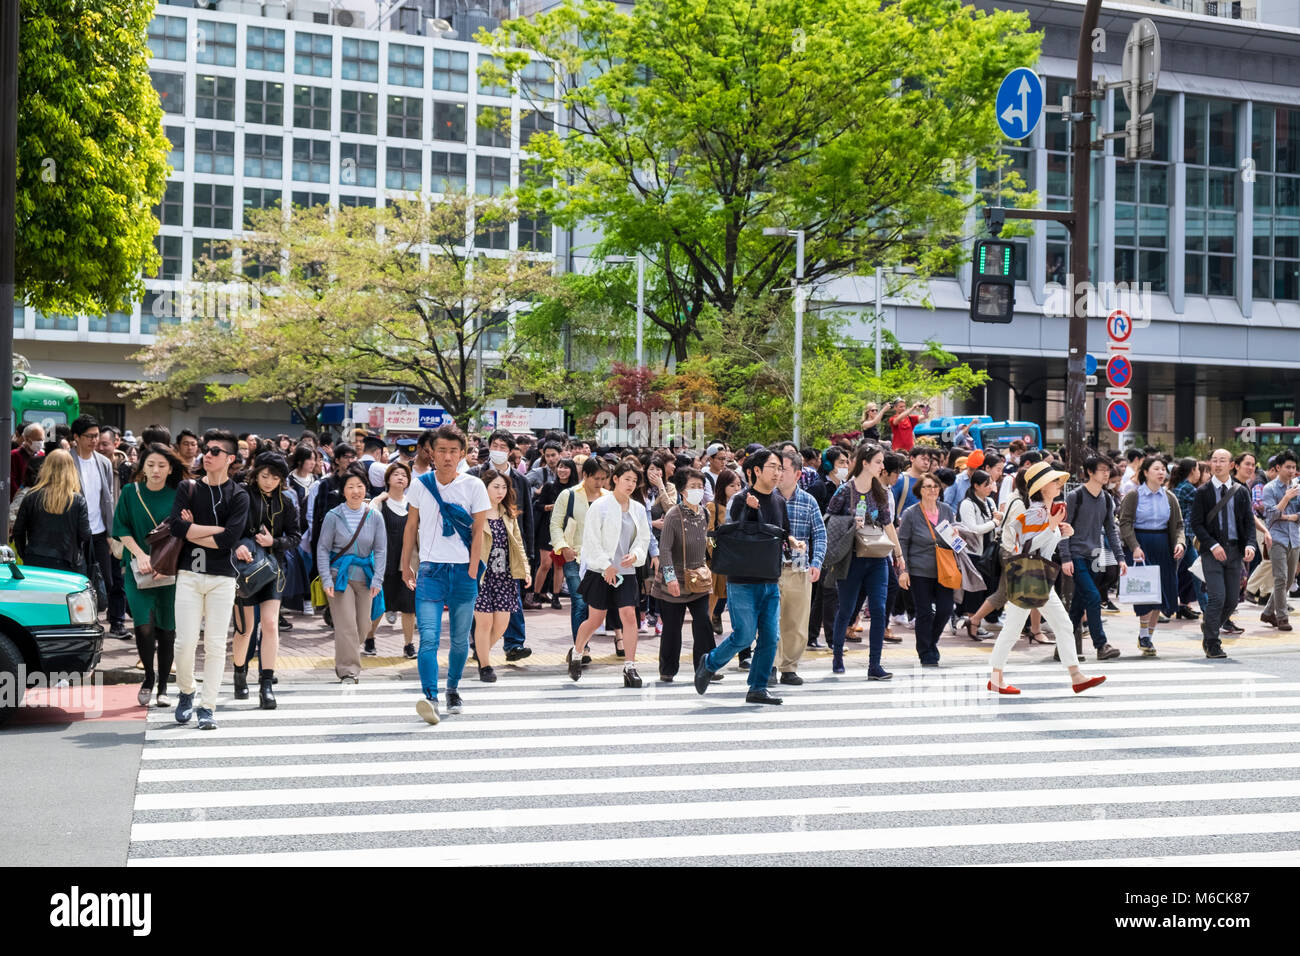 Shibuya Crossing, Tokyo, Japan - crowded pedestrian crossing Stock Photo